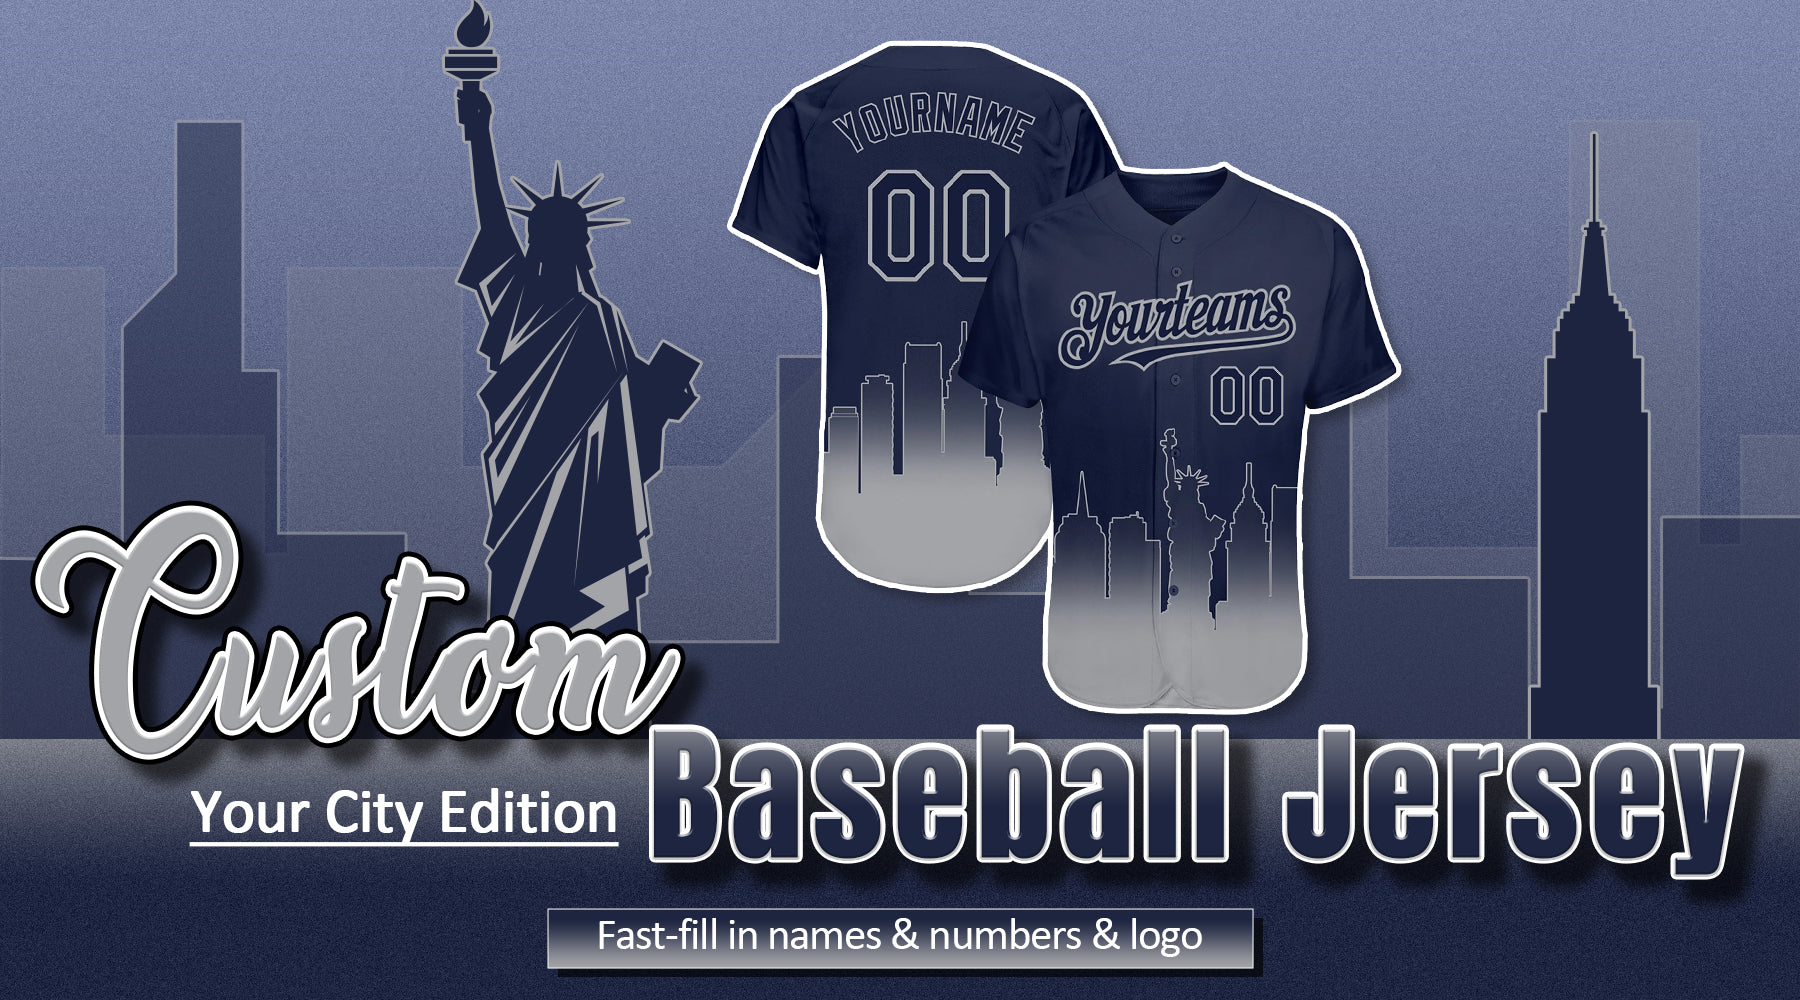 Custom Electric Blue Baseball Jerseys  Blue Shirt Baseball Clothing -  FansIdea